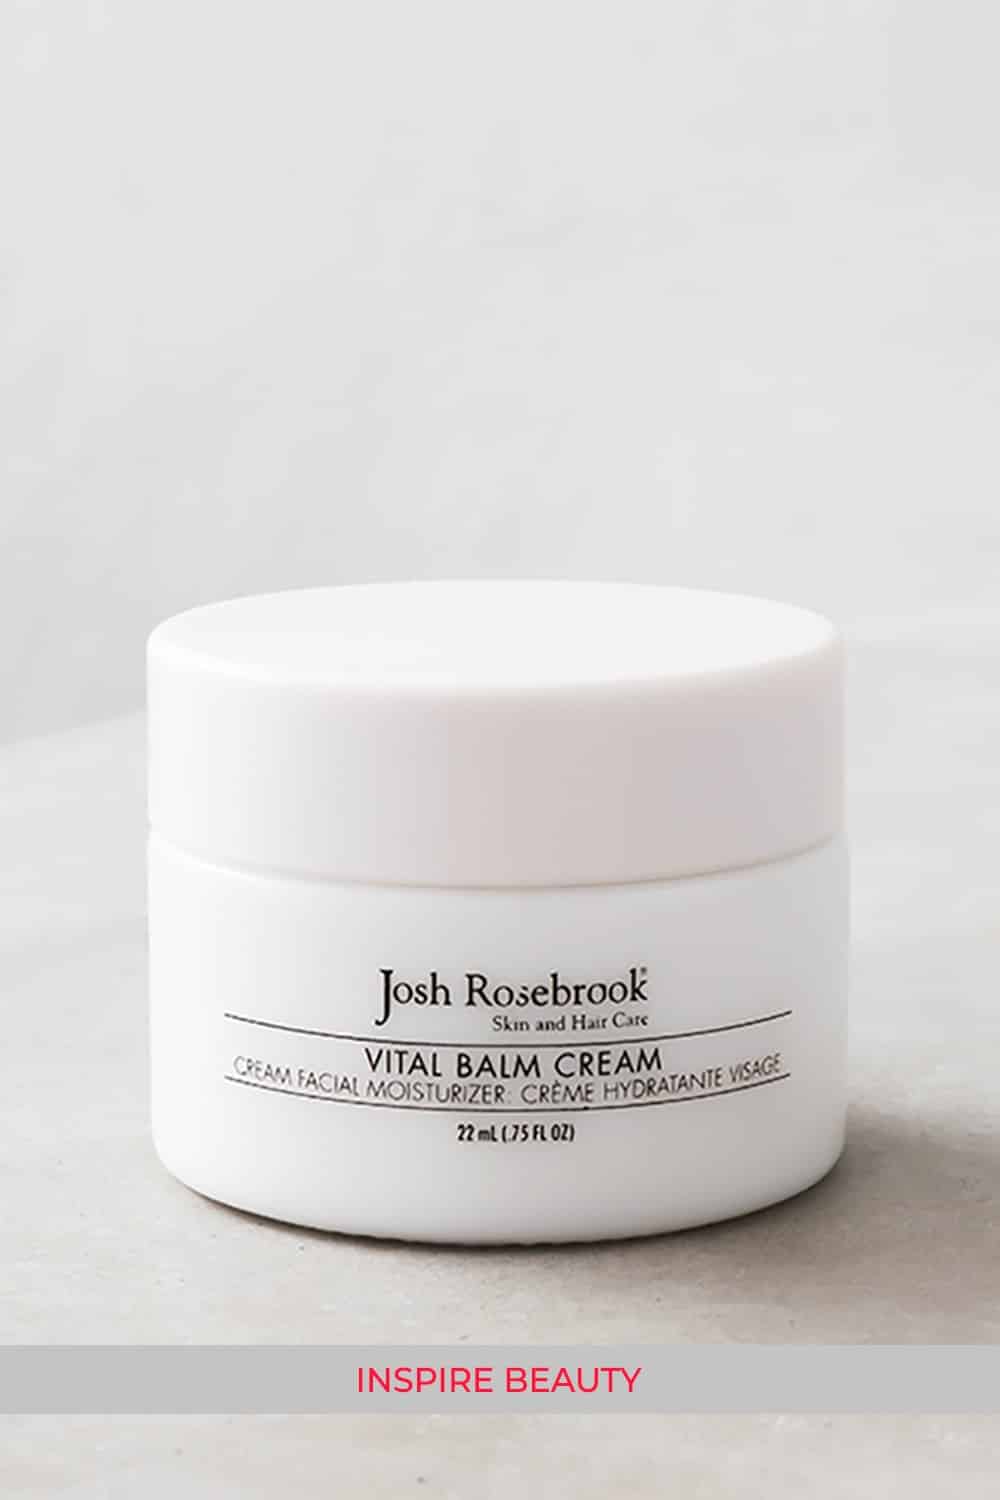 Josh Rosebrook Vital Balm Cream review, rich and nourishing moisturizer for dry or maturing skin